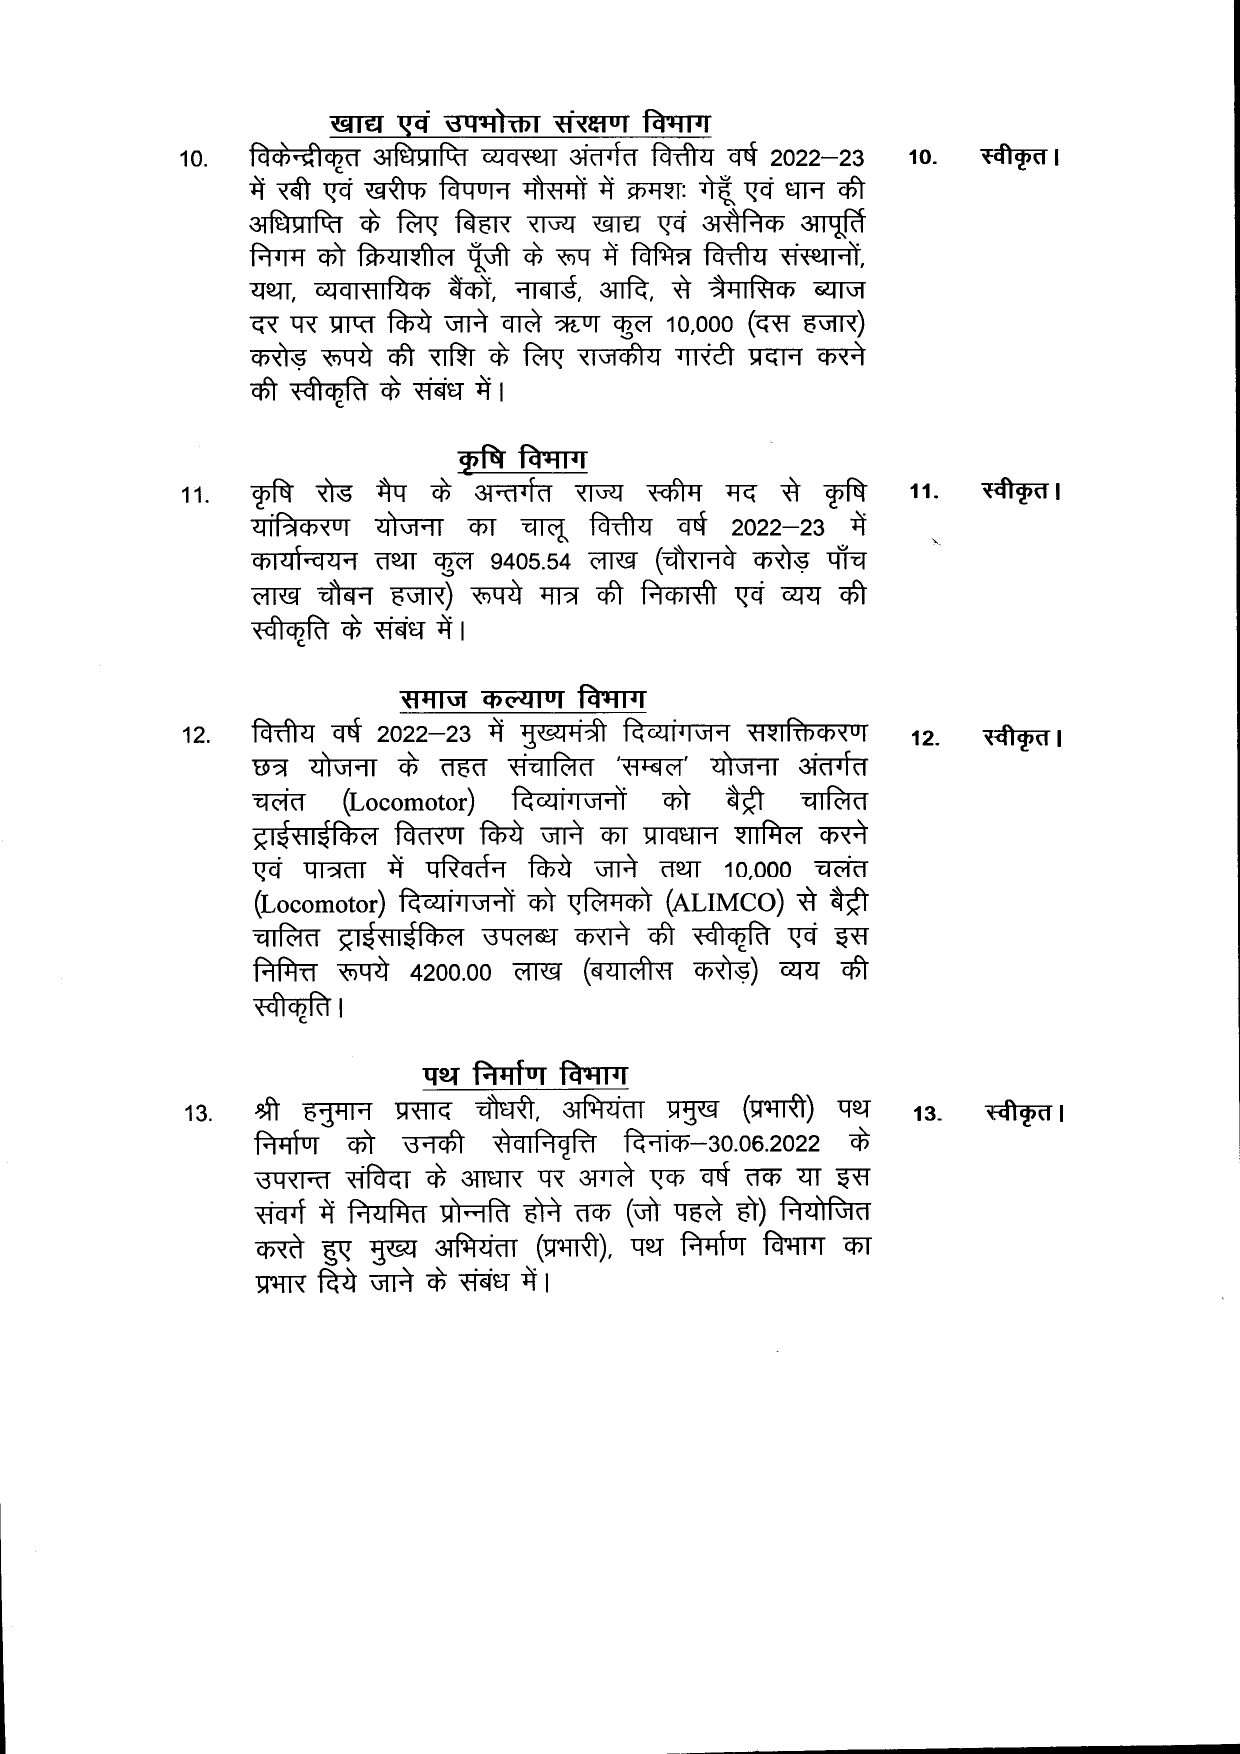 Nitish cabinet stamps total 13 agendas including construction of ropeway on Gaya Dungeshwari mountain 3